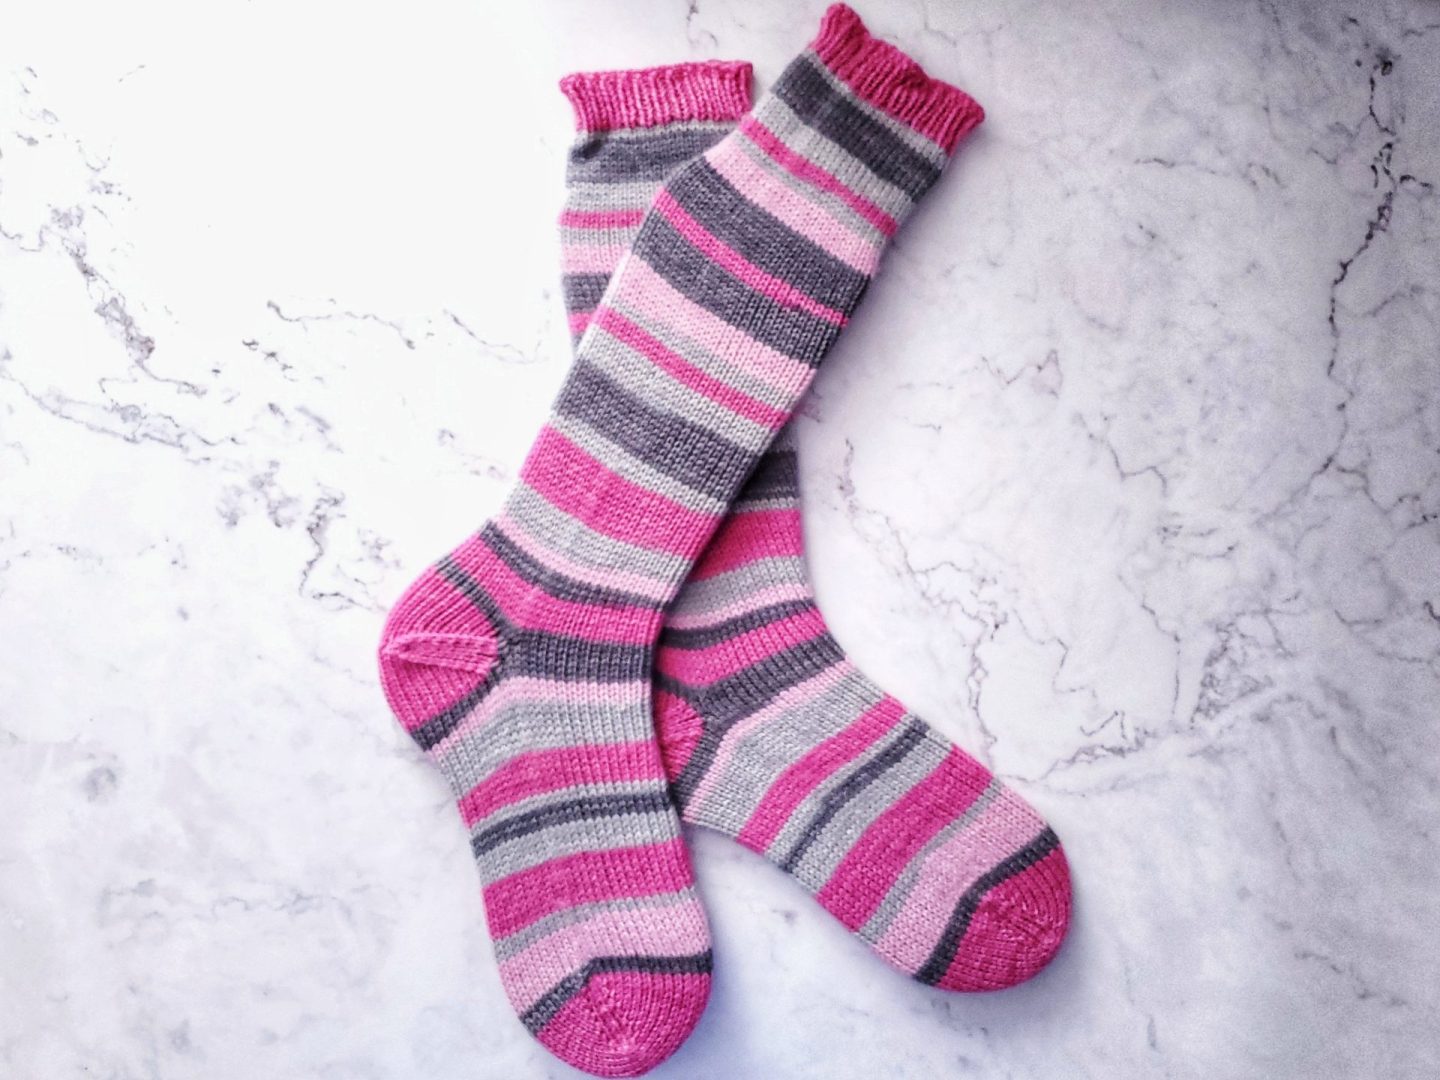 Self-striping sock yarn knitting project